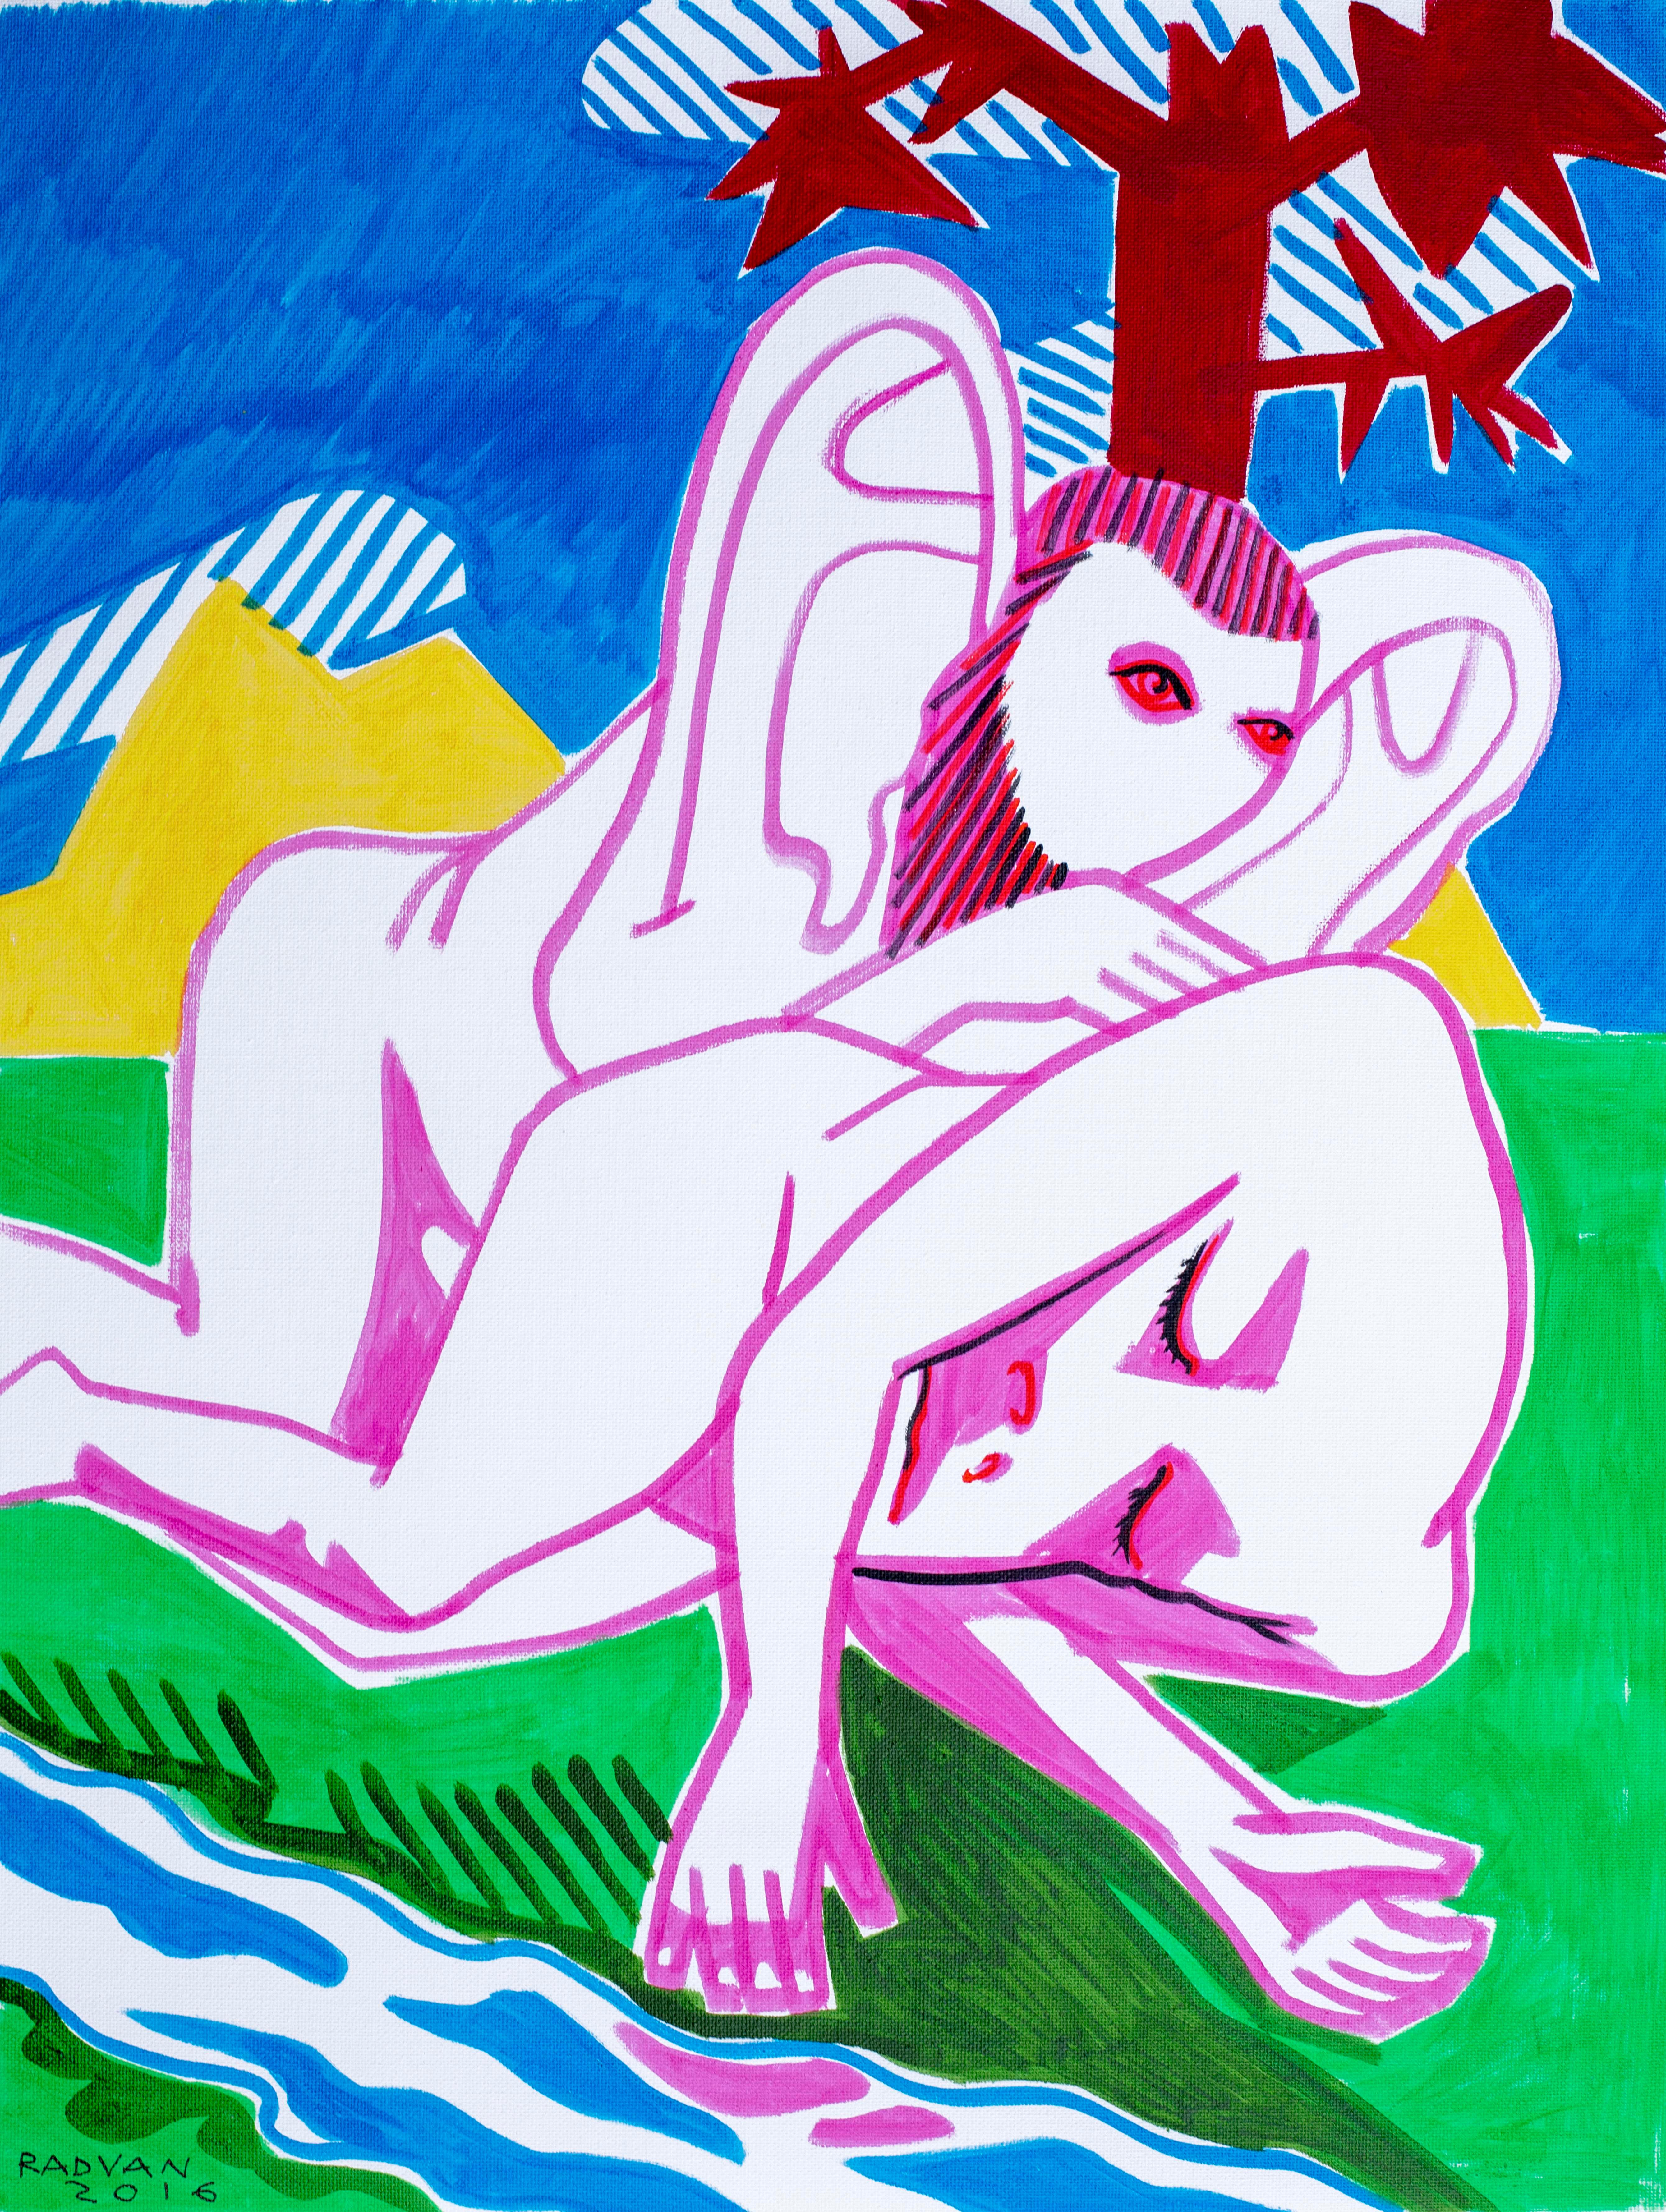 Alexandru Rădvan Nude Painting - Mythological VI (Panot and Blem) - Contemporary Art, Blue, Green, Nude, Pink